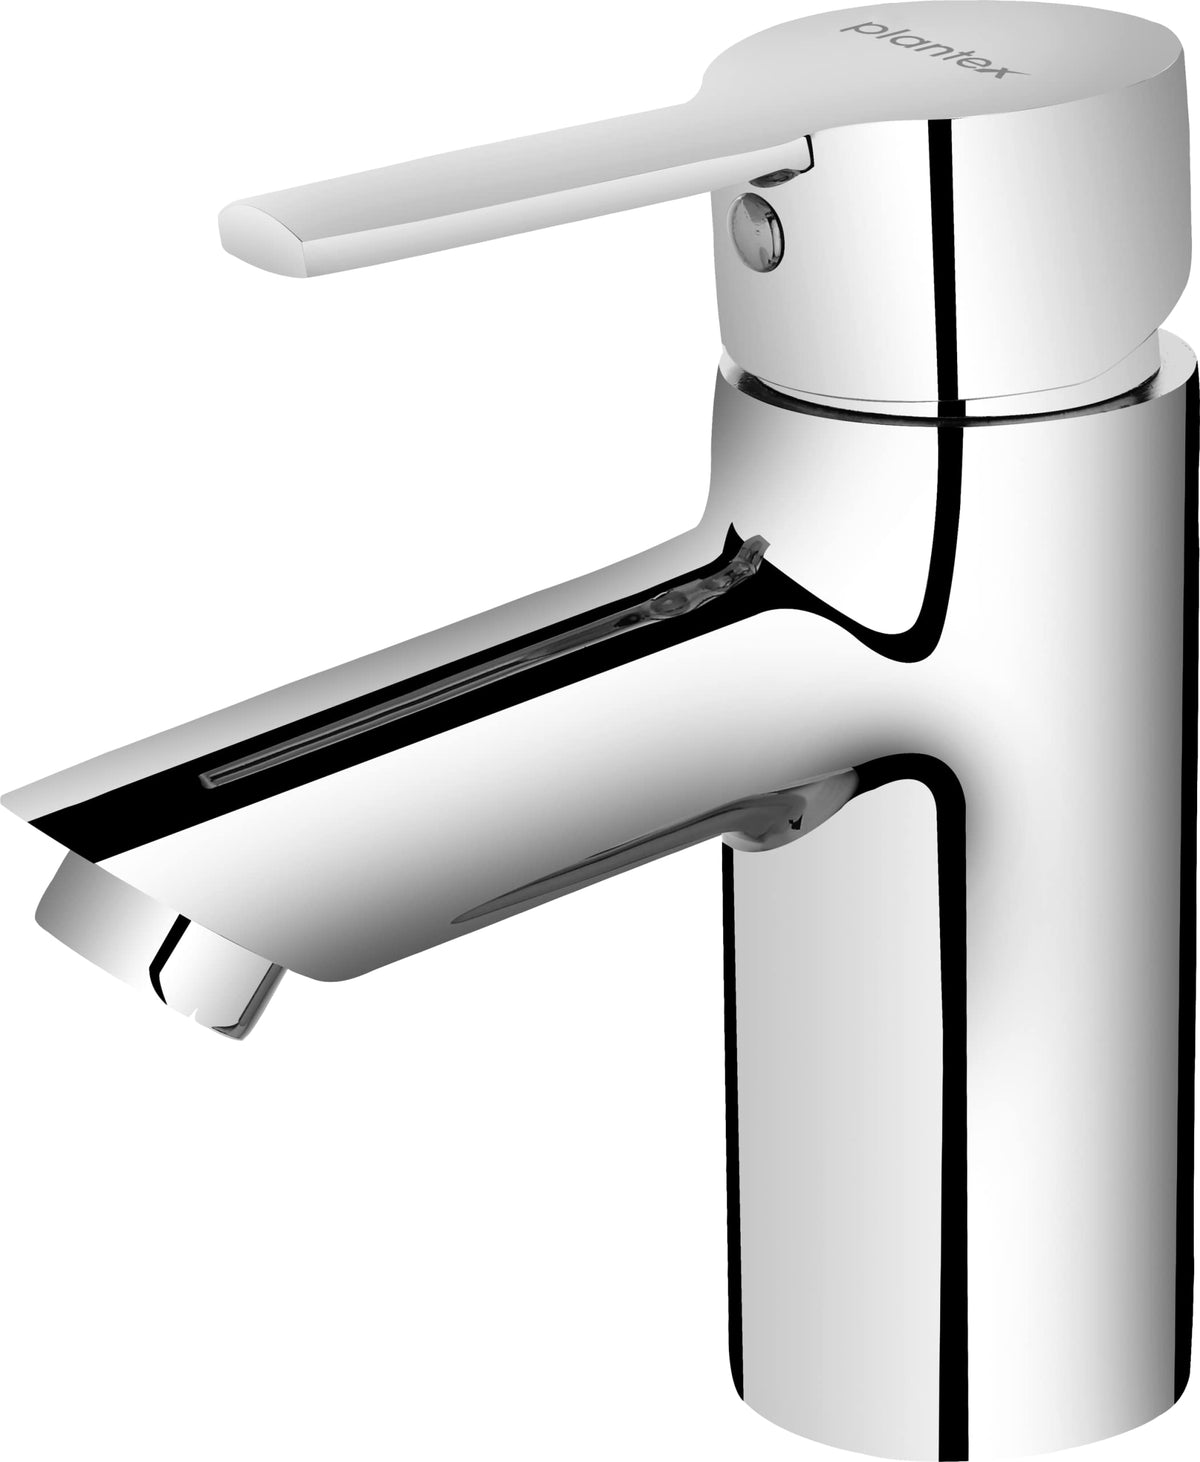 Plantex Pure Brass BAL-523 Single Lever Basin Mixer/Basin Faucet Tap for Bathroom with Teflon Tape (Mirror-Chrome Finish)